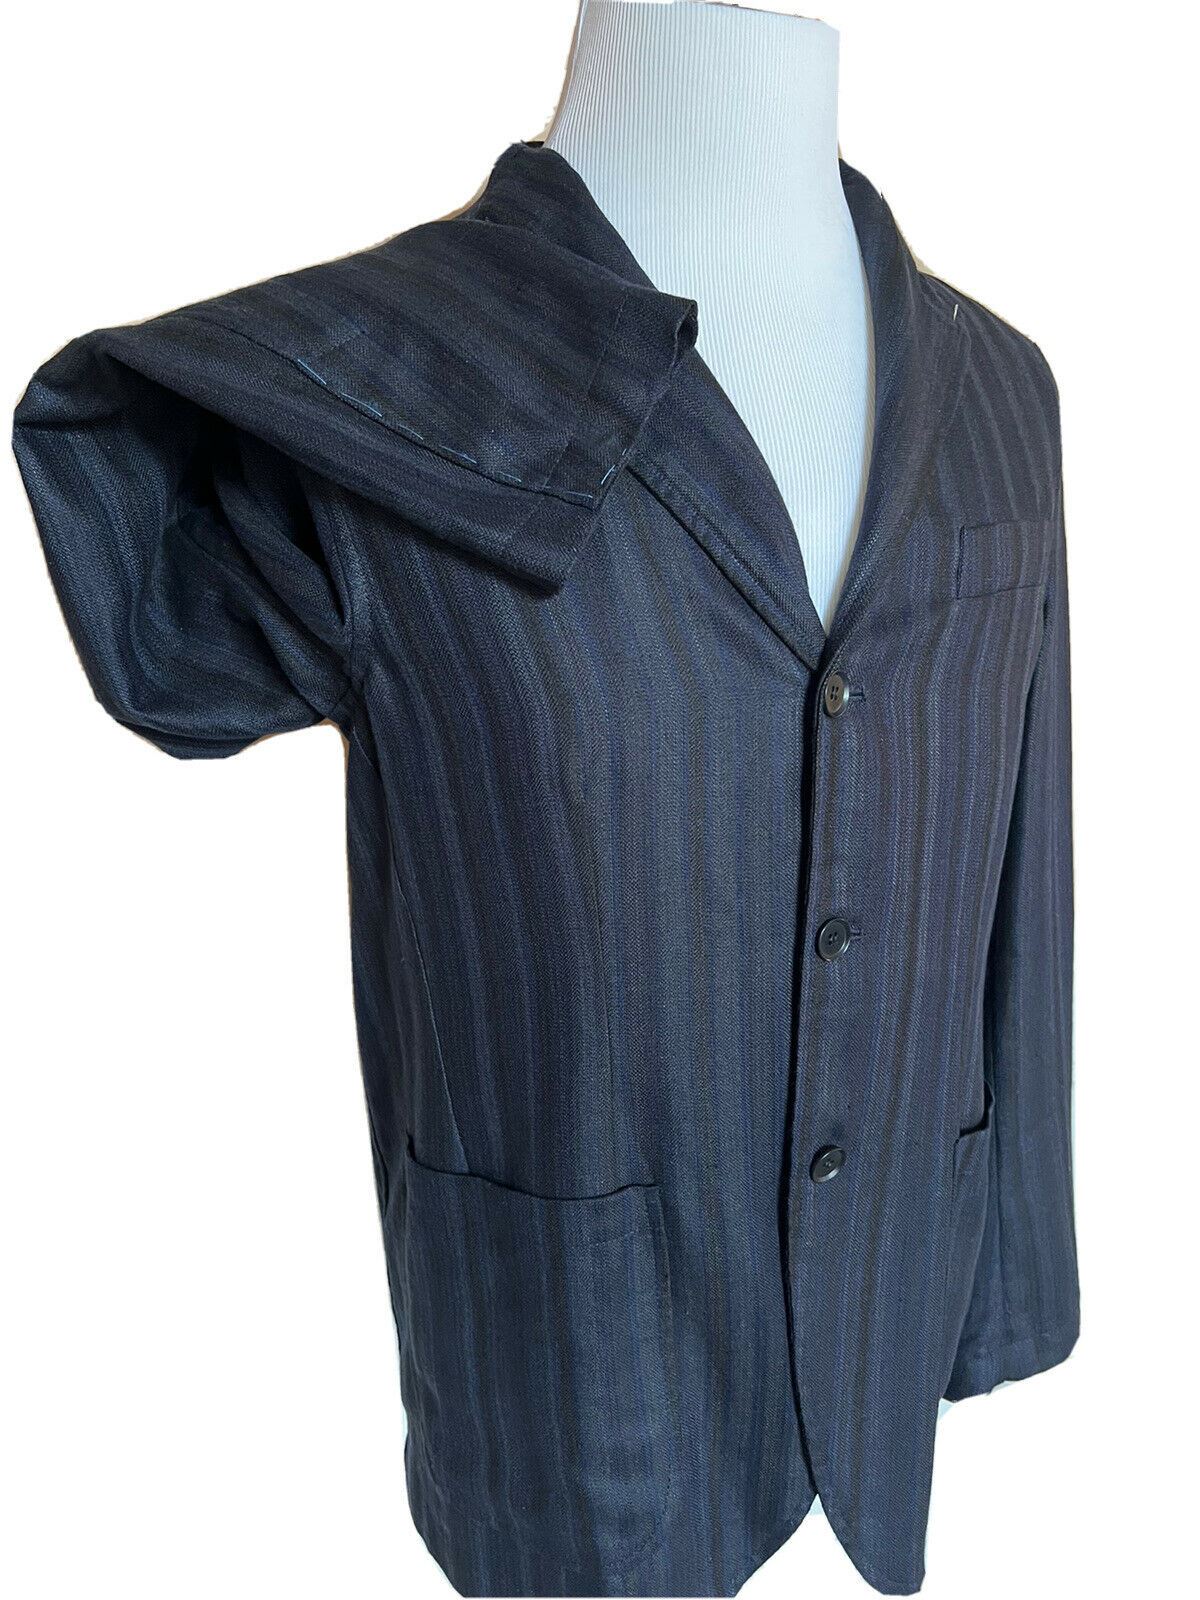 NWT $1795 EIDOS Napoli Sport Coat Jacket Silk/Wool Blue/Black 40R US (50R Eu) IT